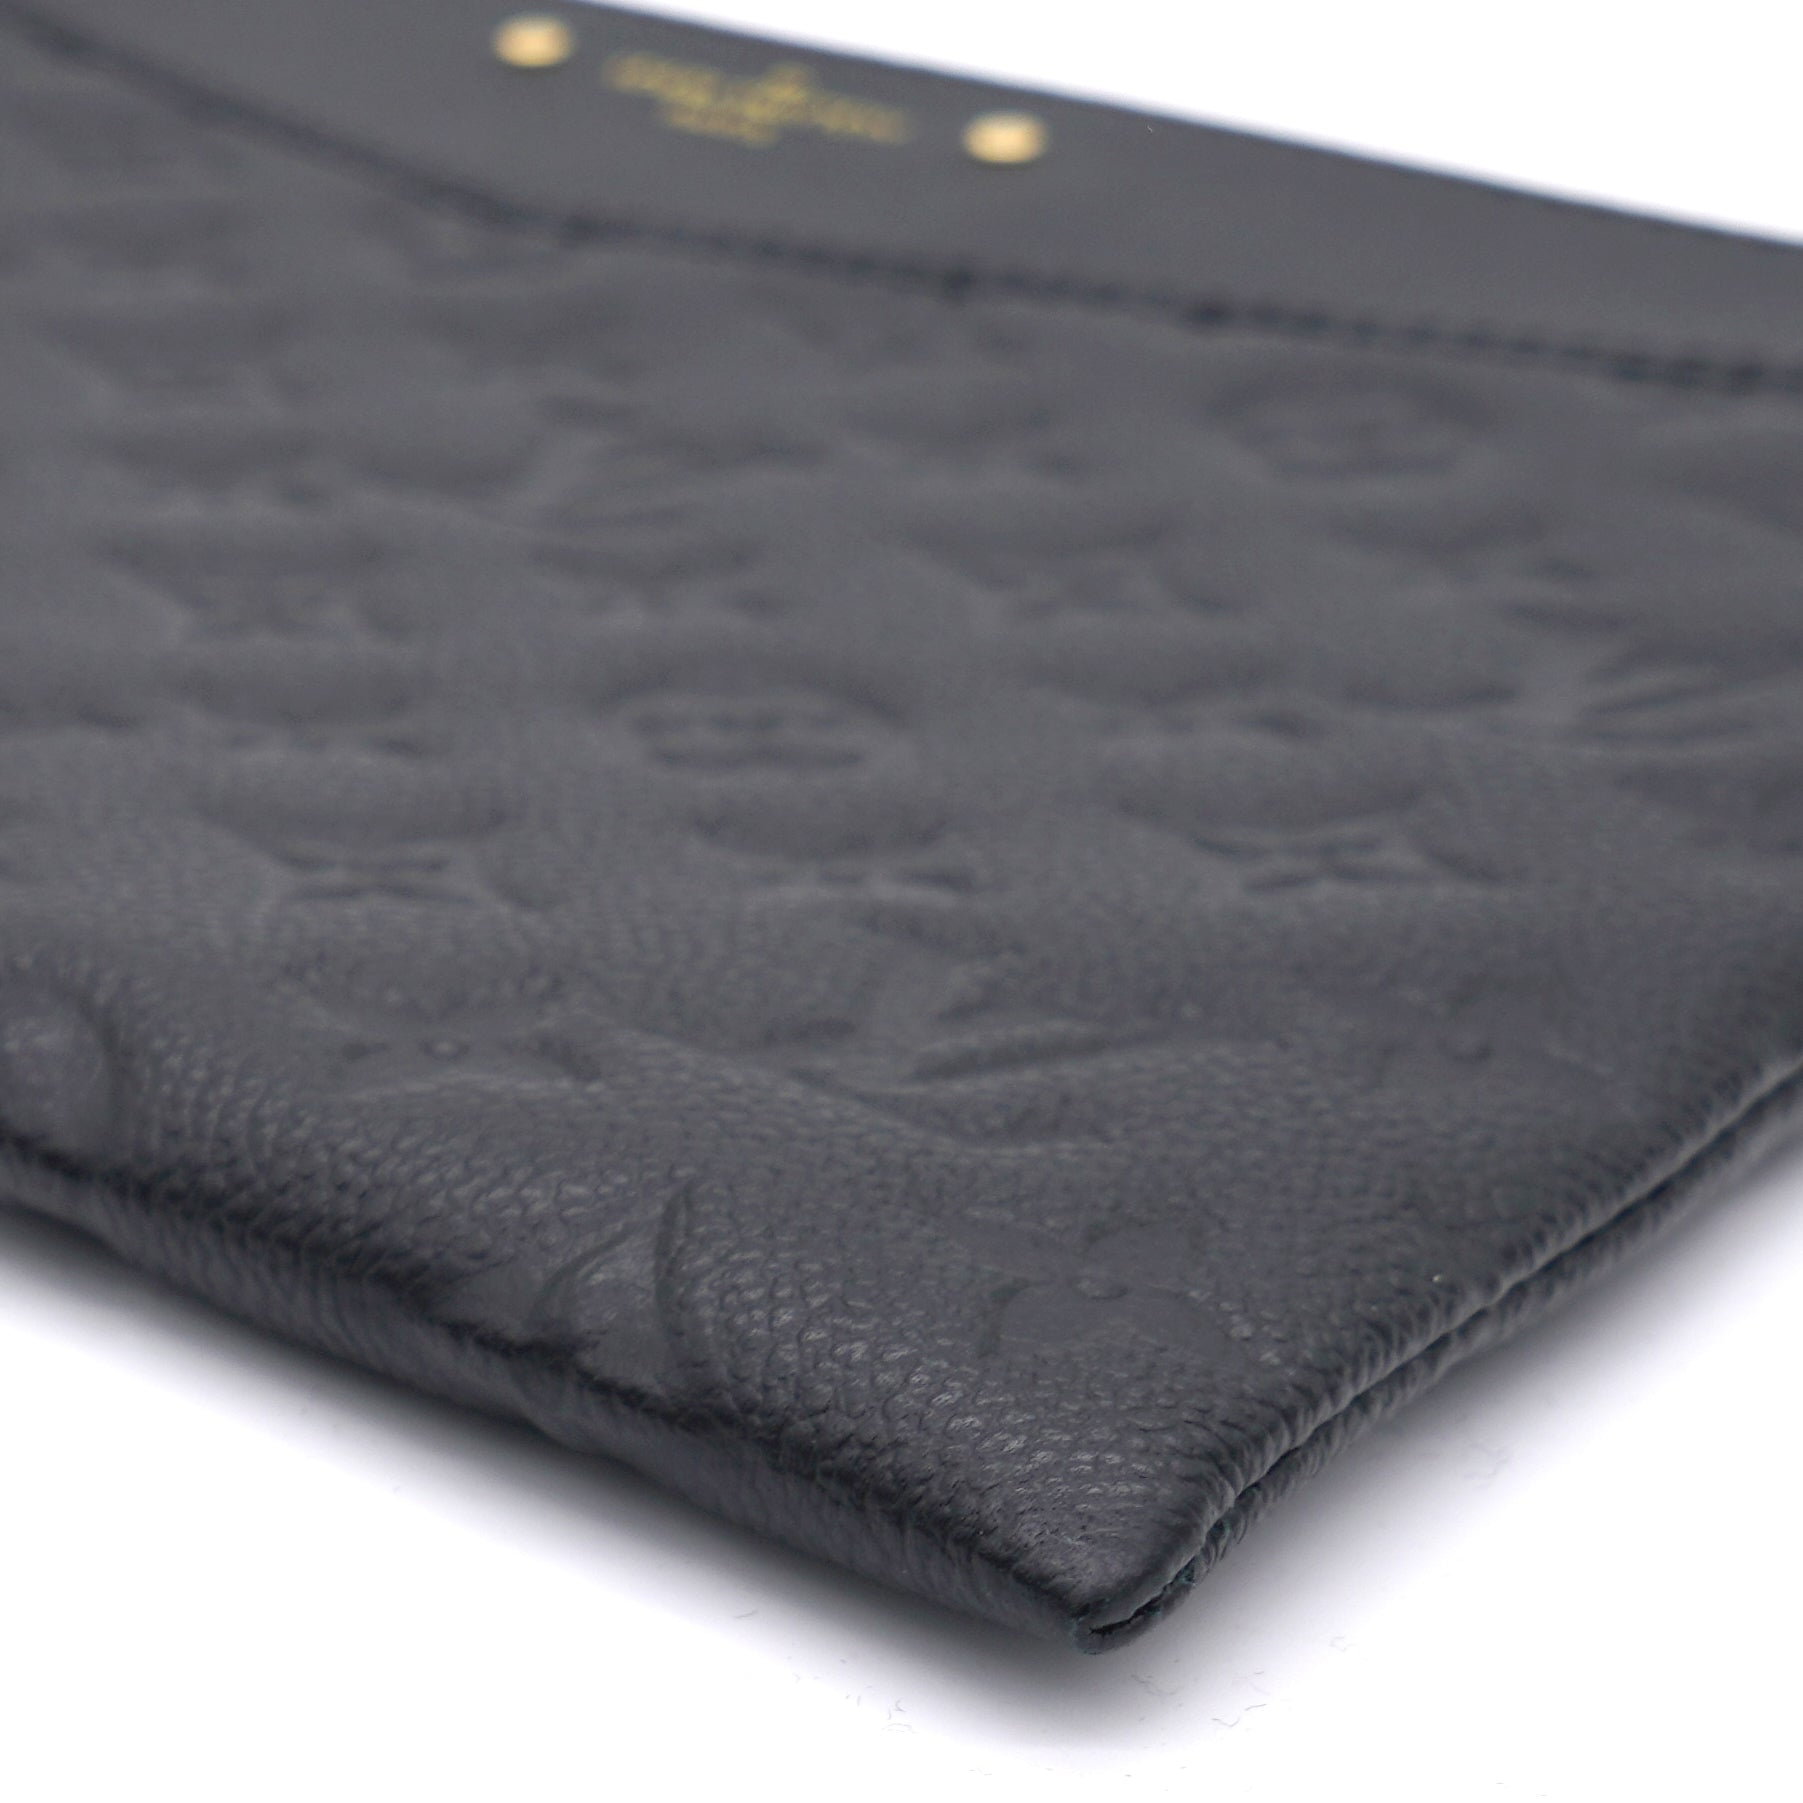 IDR 11,5jt. New LV daily Pouch Black Impriente leather. Db, box, booklet.  Ready luar kota. (Size 30x21cm)